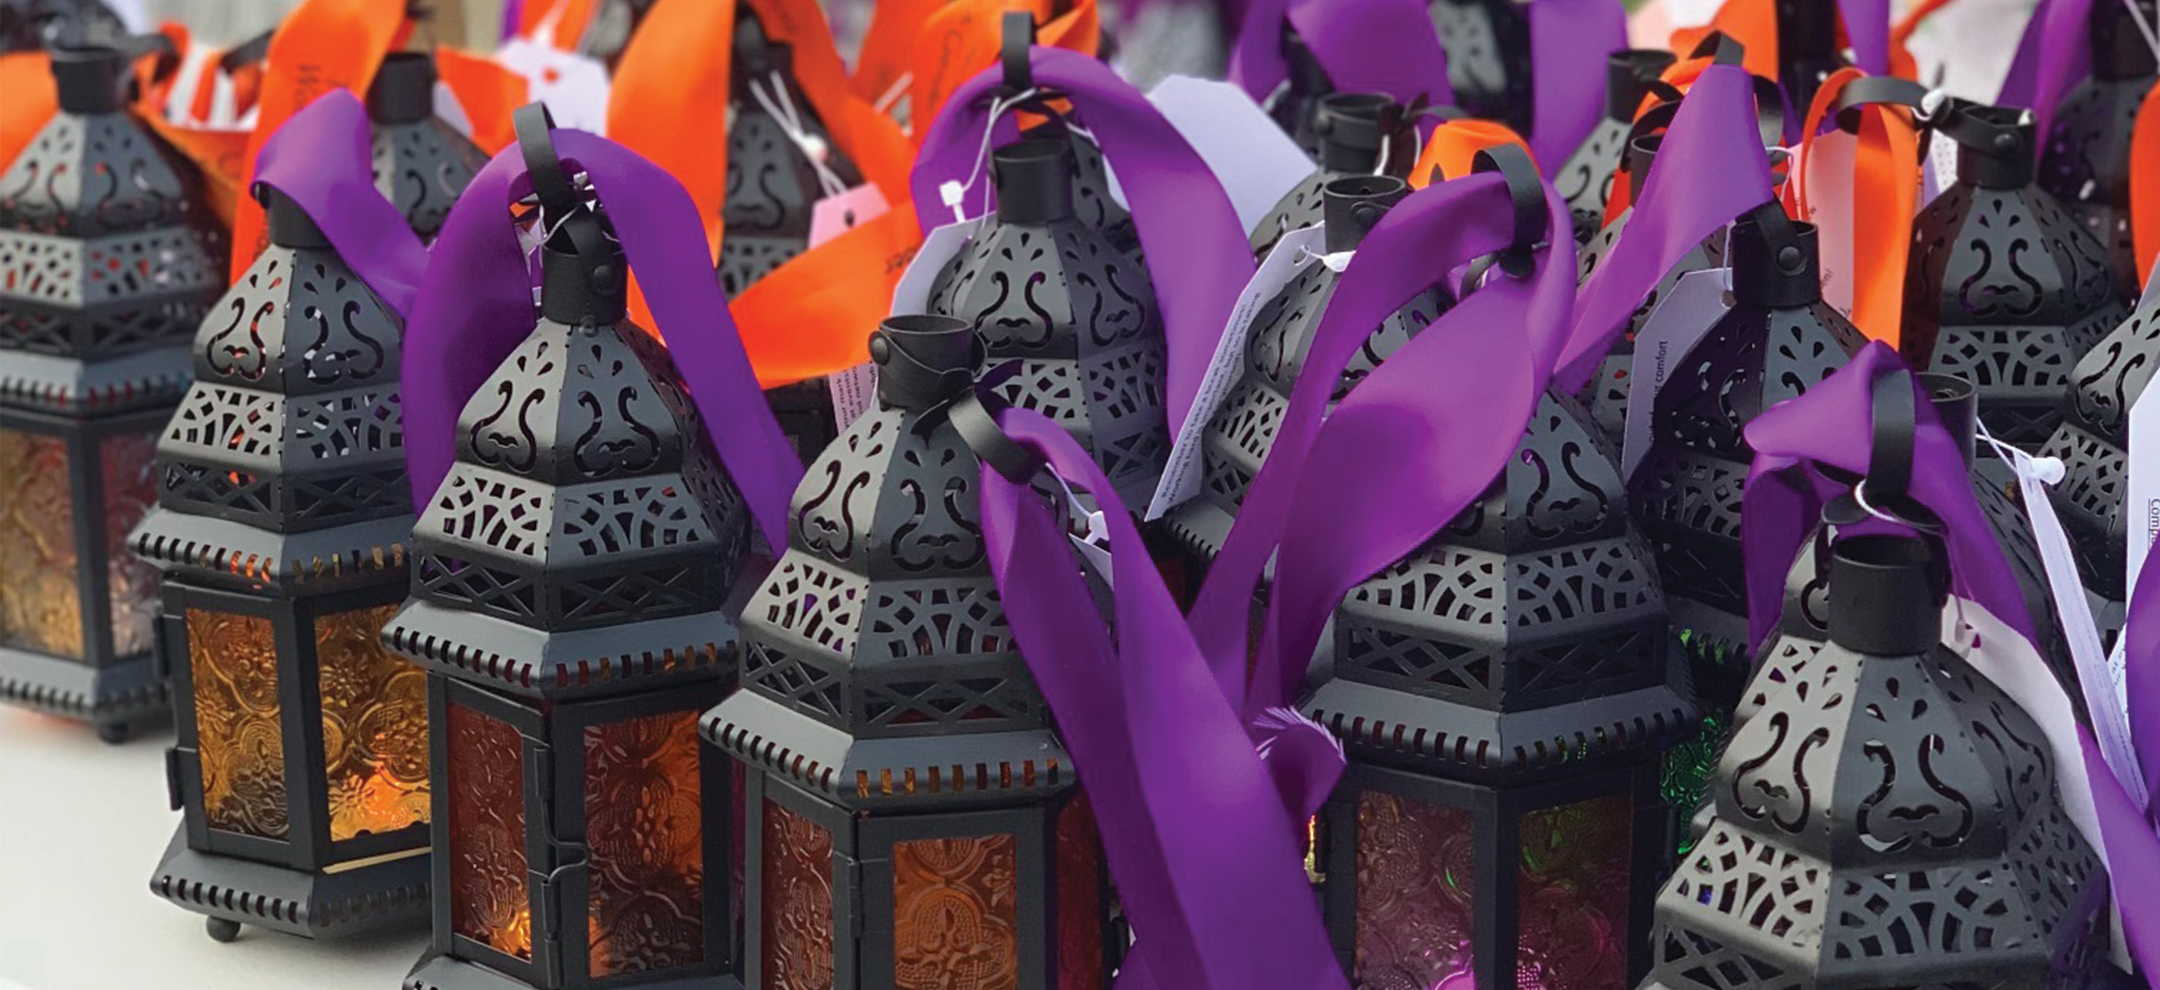 Lanterns with purple and orange ribbons